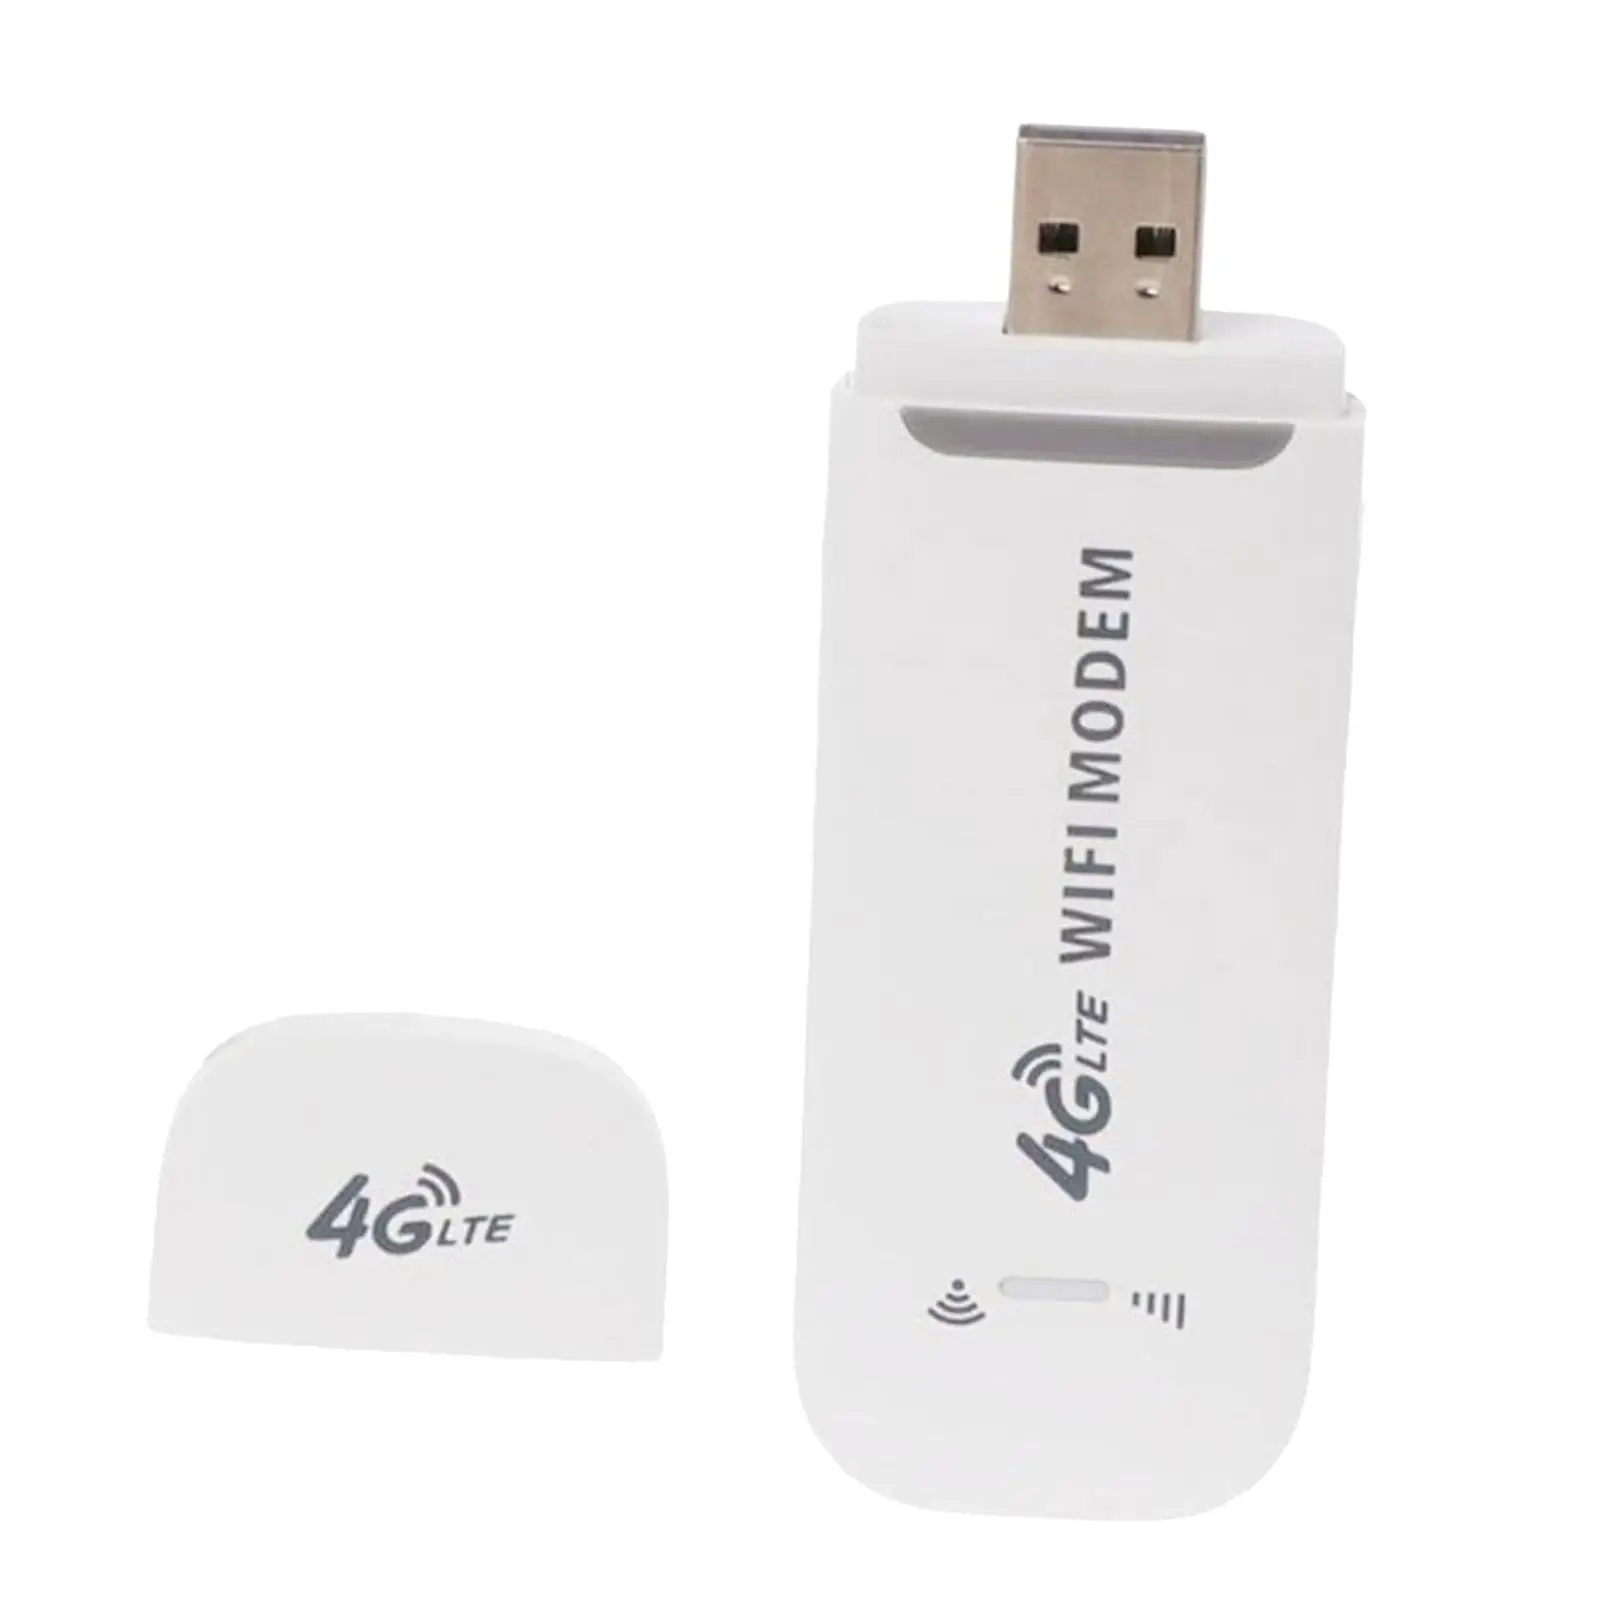 Unlocked 4G LTE USB Modem Dongle Stick Mobile Broadband WiFi Hotspot Sim Card Wireless Router Stick Network Adapter for Desktop